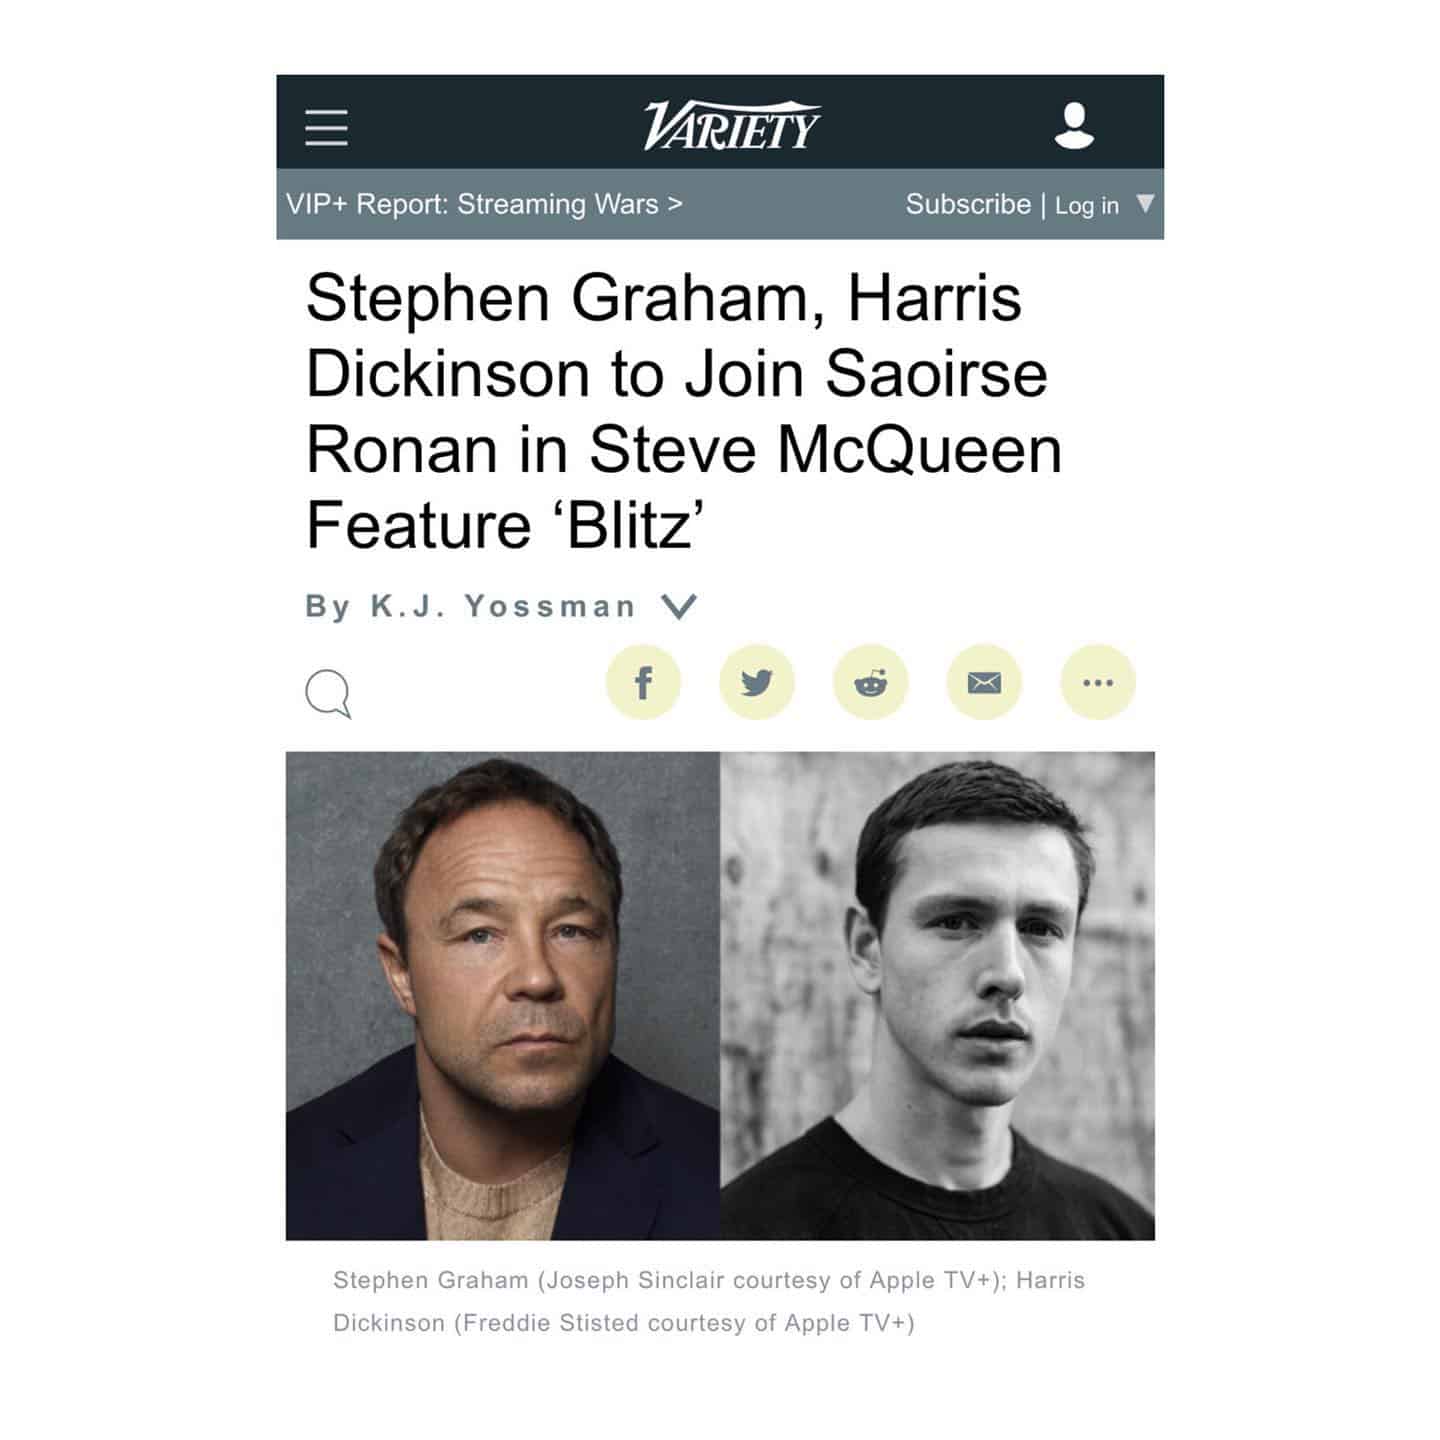 @stephengraham1973 to star in Steve McQueen’s an Apple Original Film